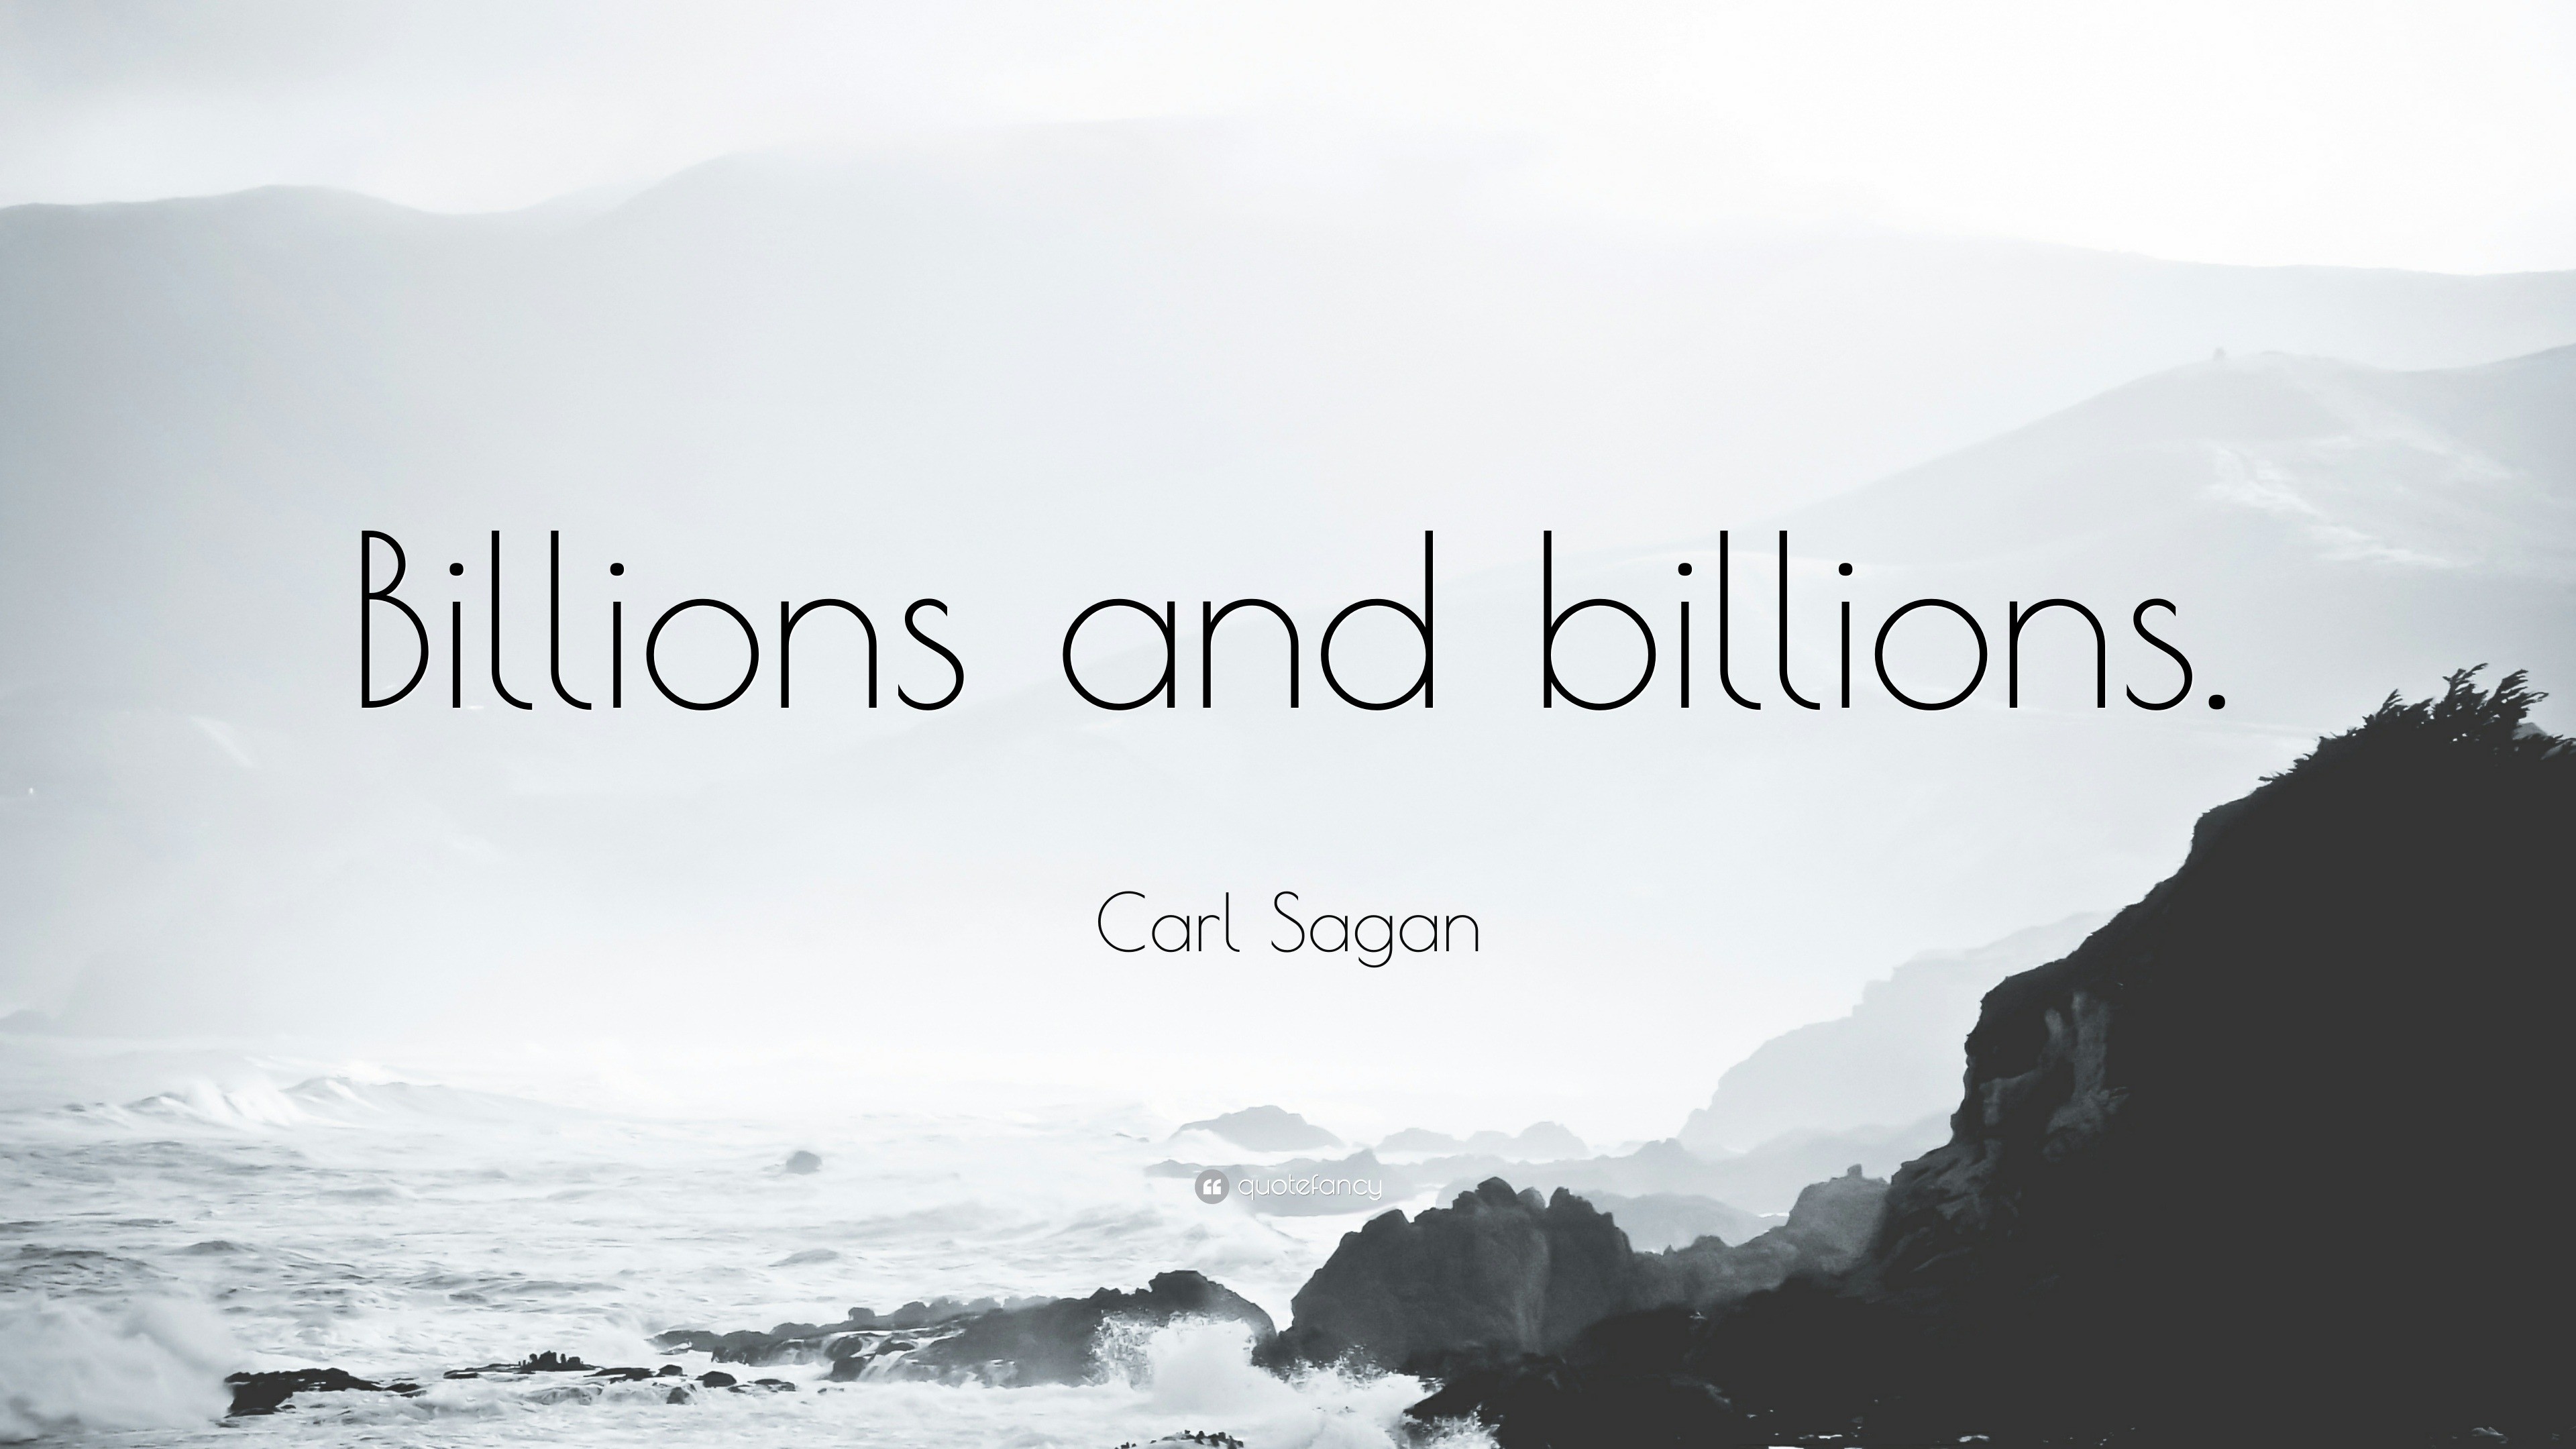 كتاب مليارات ومليارات - كارل ساجان